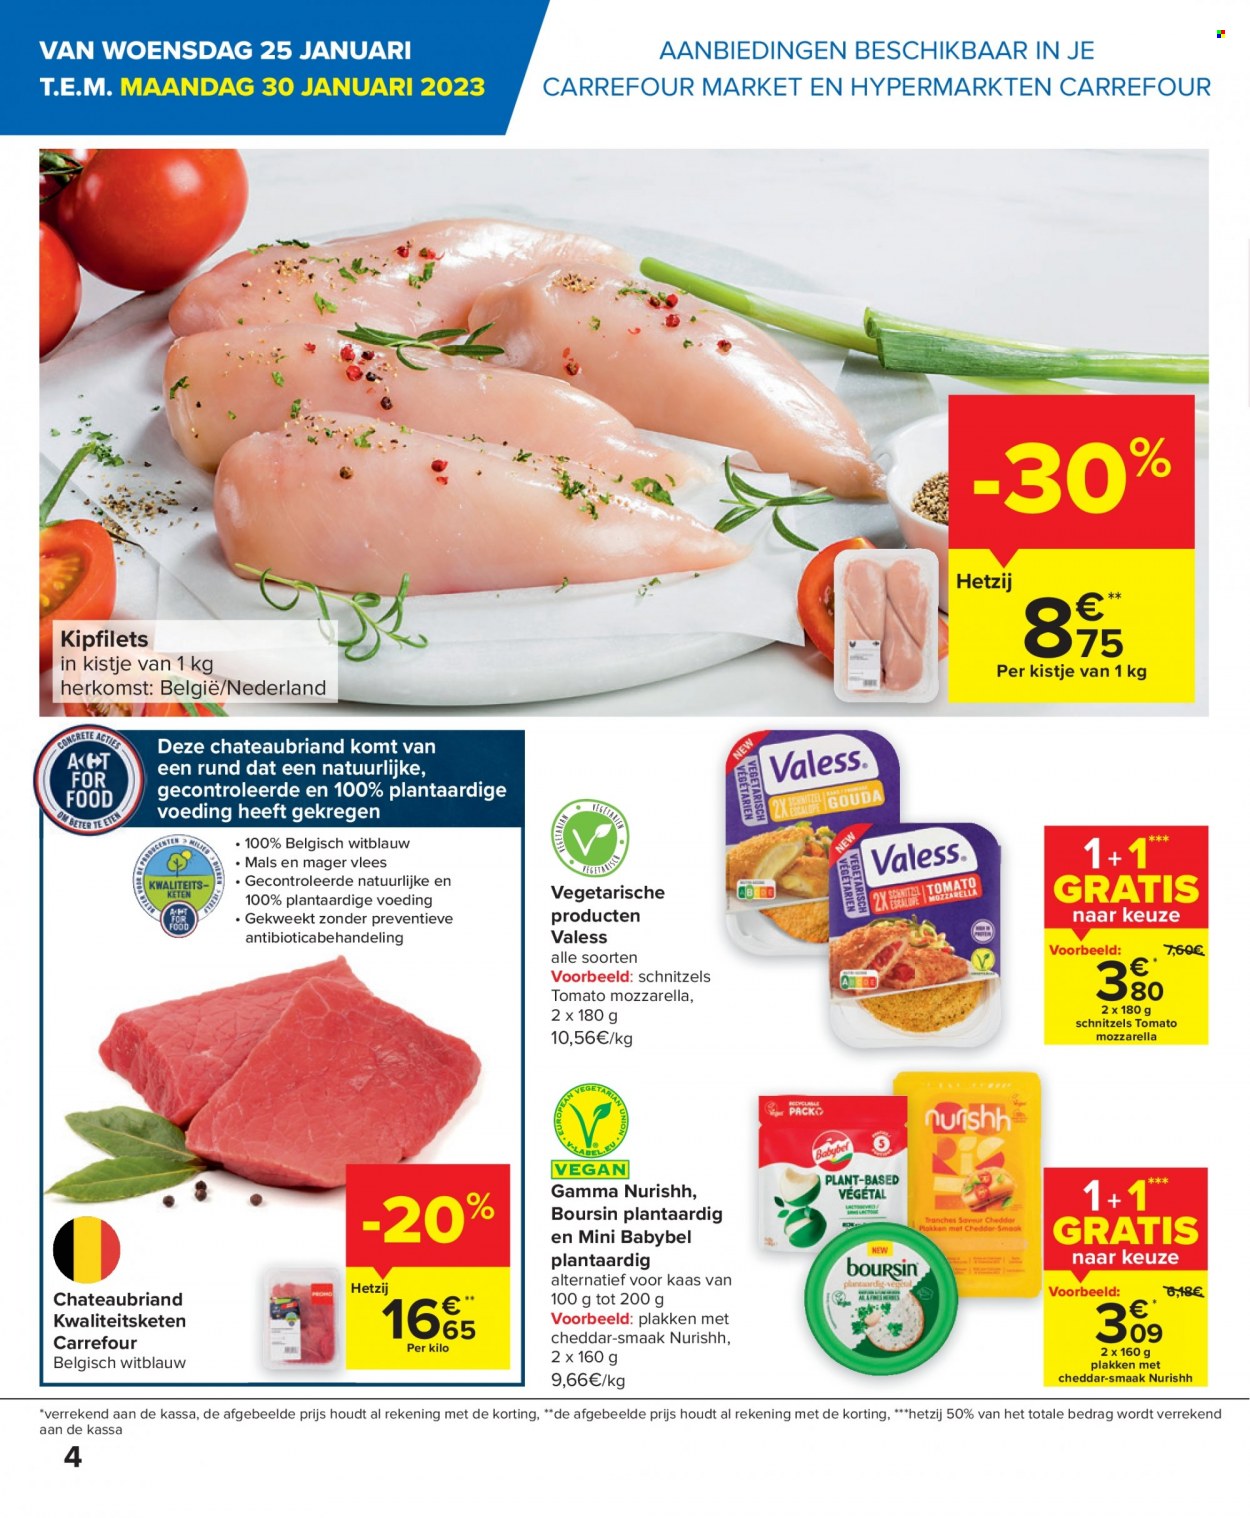 thumbnail - Carrefour-aanbieding - 25/01/2023 - 06/02/2023 -  producten in de aanbieding - Gamma, kaas, Babybel, Boursin, mozzarella. Pagina 4.